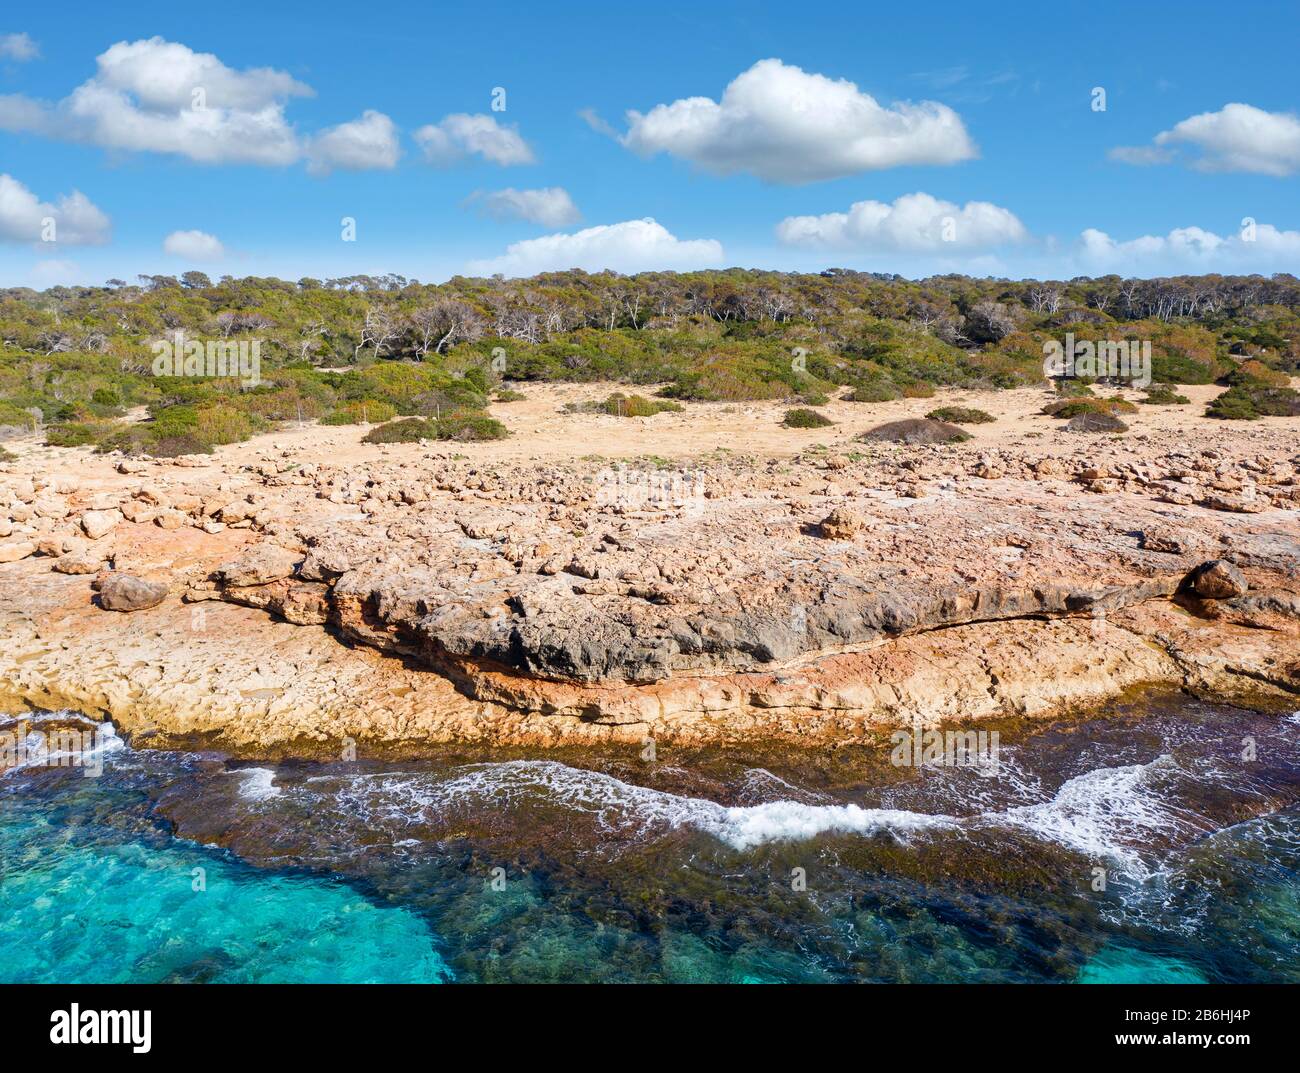 Rocky coast at Cap de ses Salines, southernmost point of Majorca, Migjorn region, Mediterranean Sea, aerial view, Majorca, Balearic Islands, Spain Stock Photo